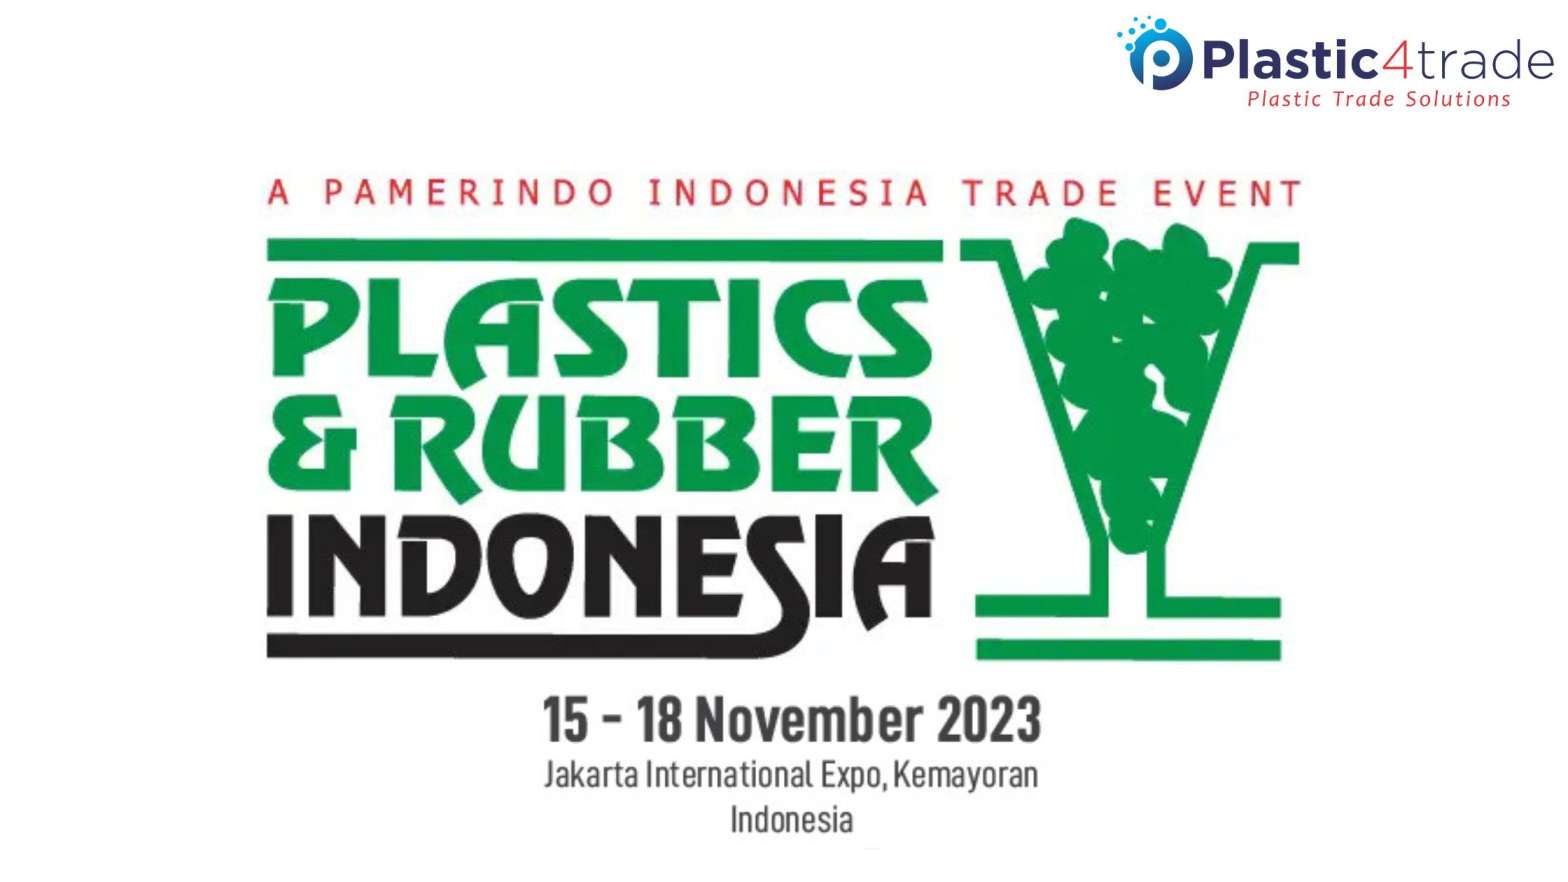 Pamerindo Plastics & Rubber Exhibition 2023 in Indonesia – Jakarta International Trade Event undefined jakarta indonesia